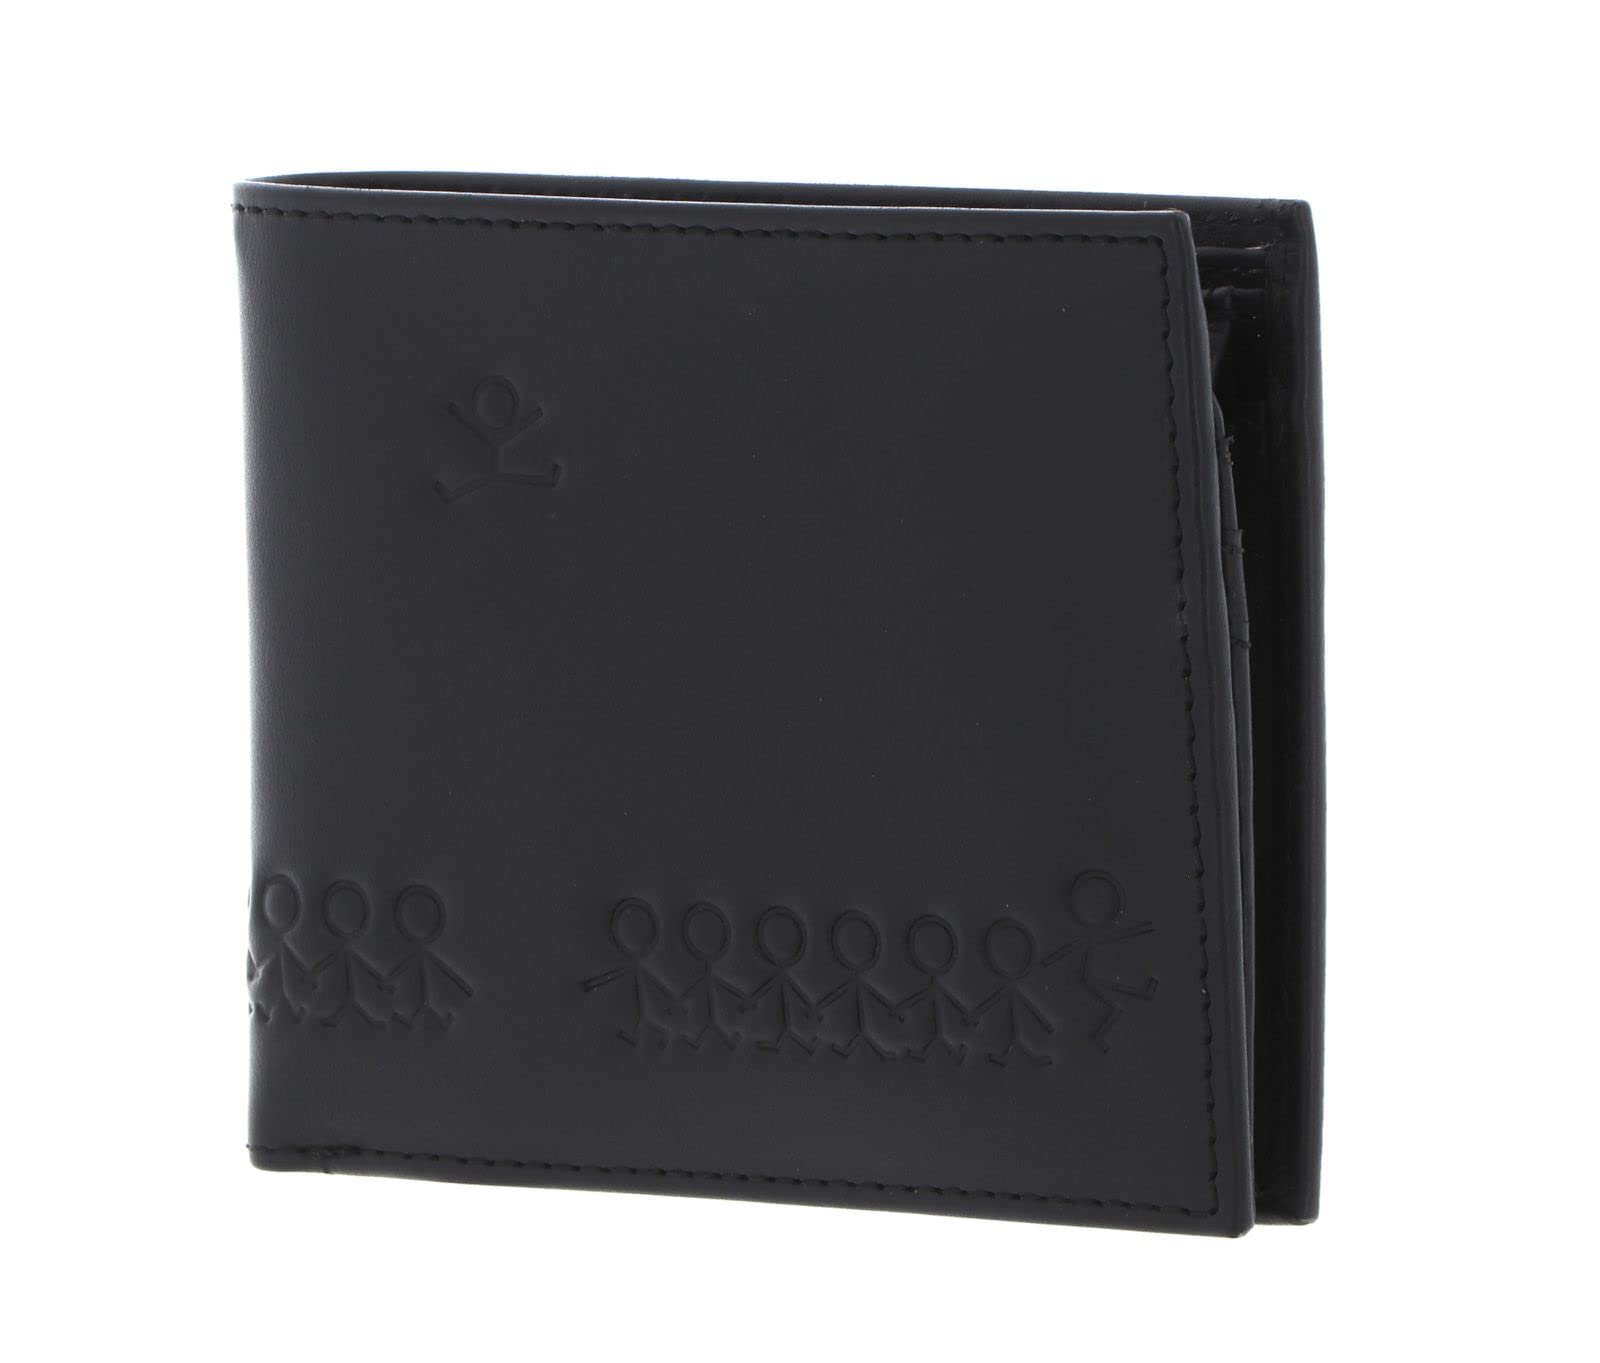 Oxmox Leather - Querscheinbörse 6cc 12 cm RFID jumping jack